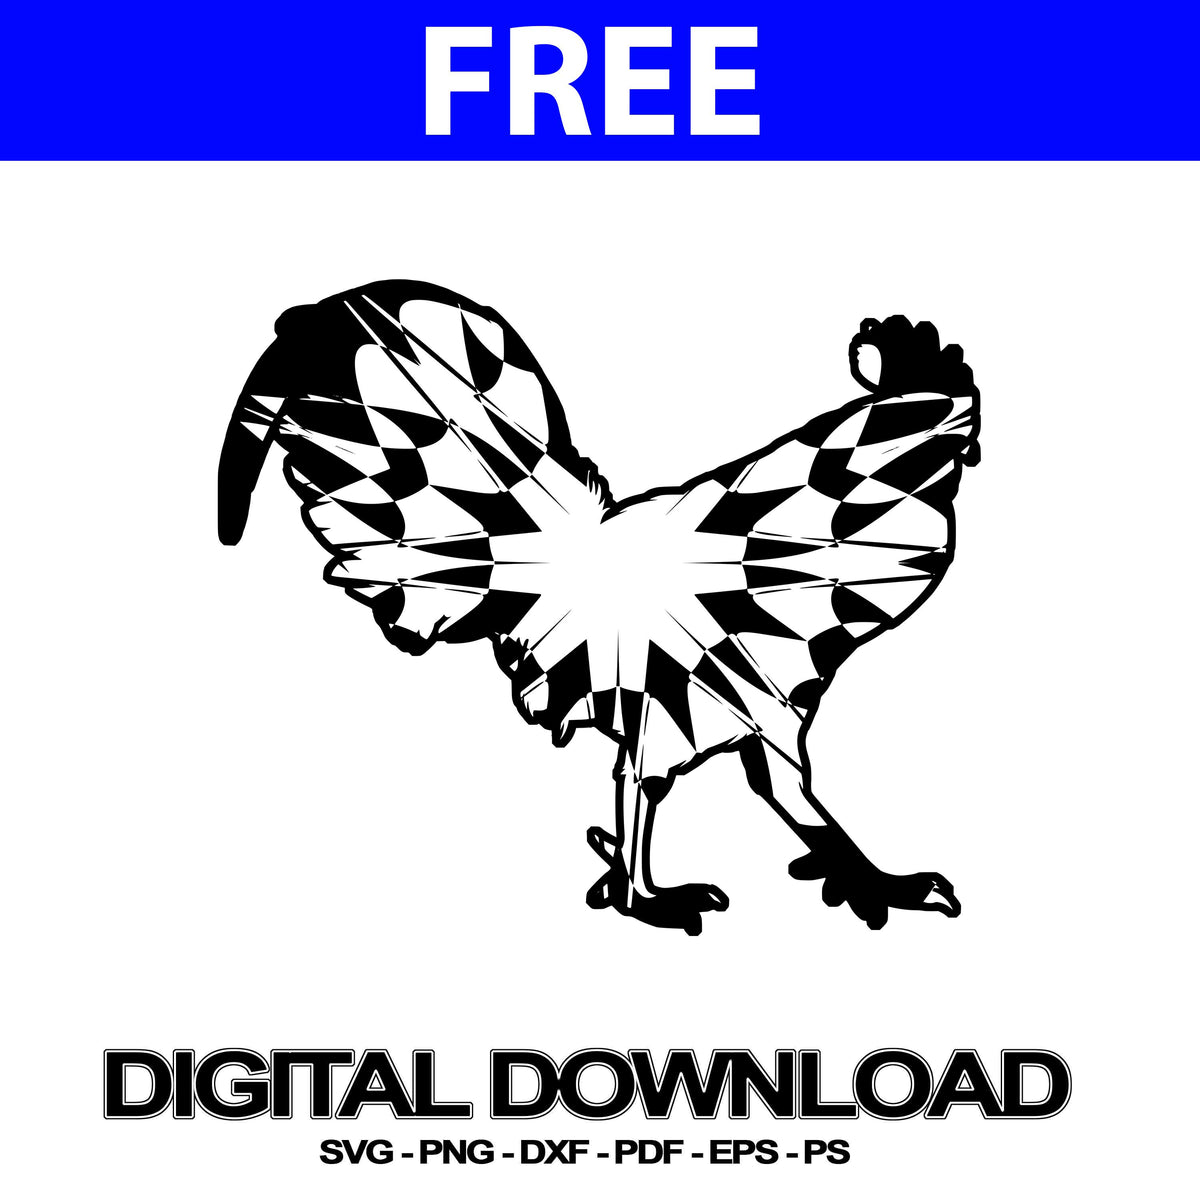 Download Rooster Svgs Files Mandala PDF | Svg Free - Mandalasvg.com